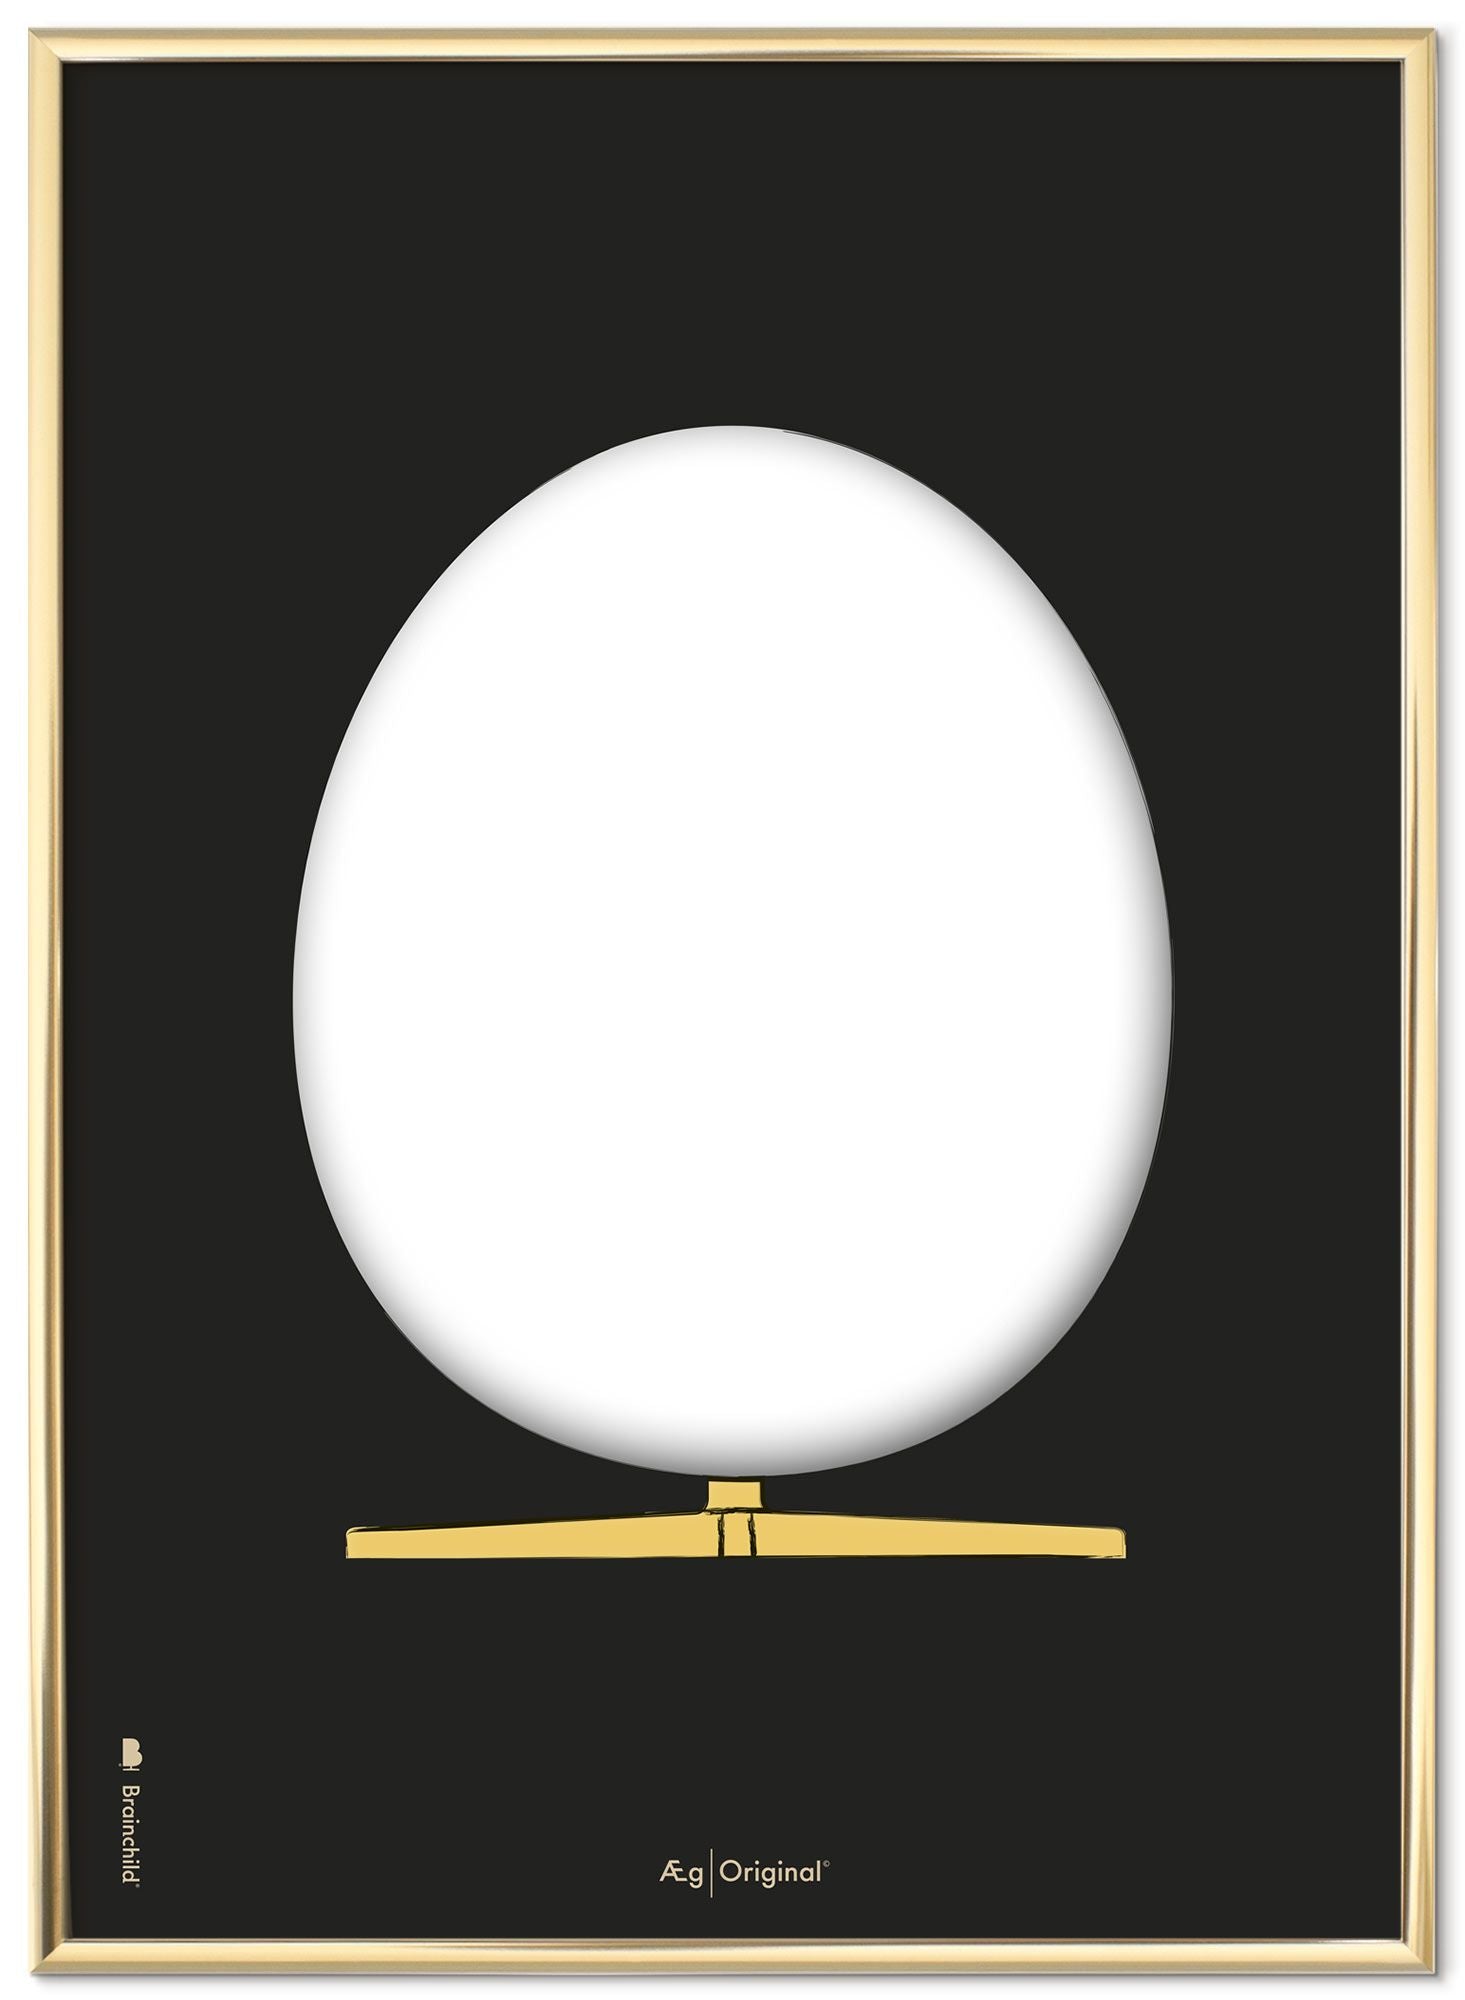 Brainchild The Egg Design Sketch Poster Frame Made Of Brass Colored Metal 70x100 Cm, Black Background